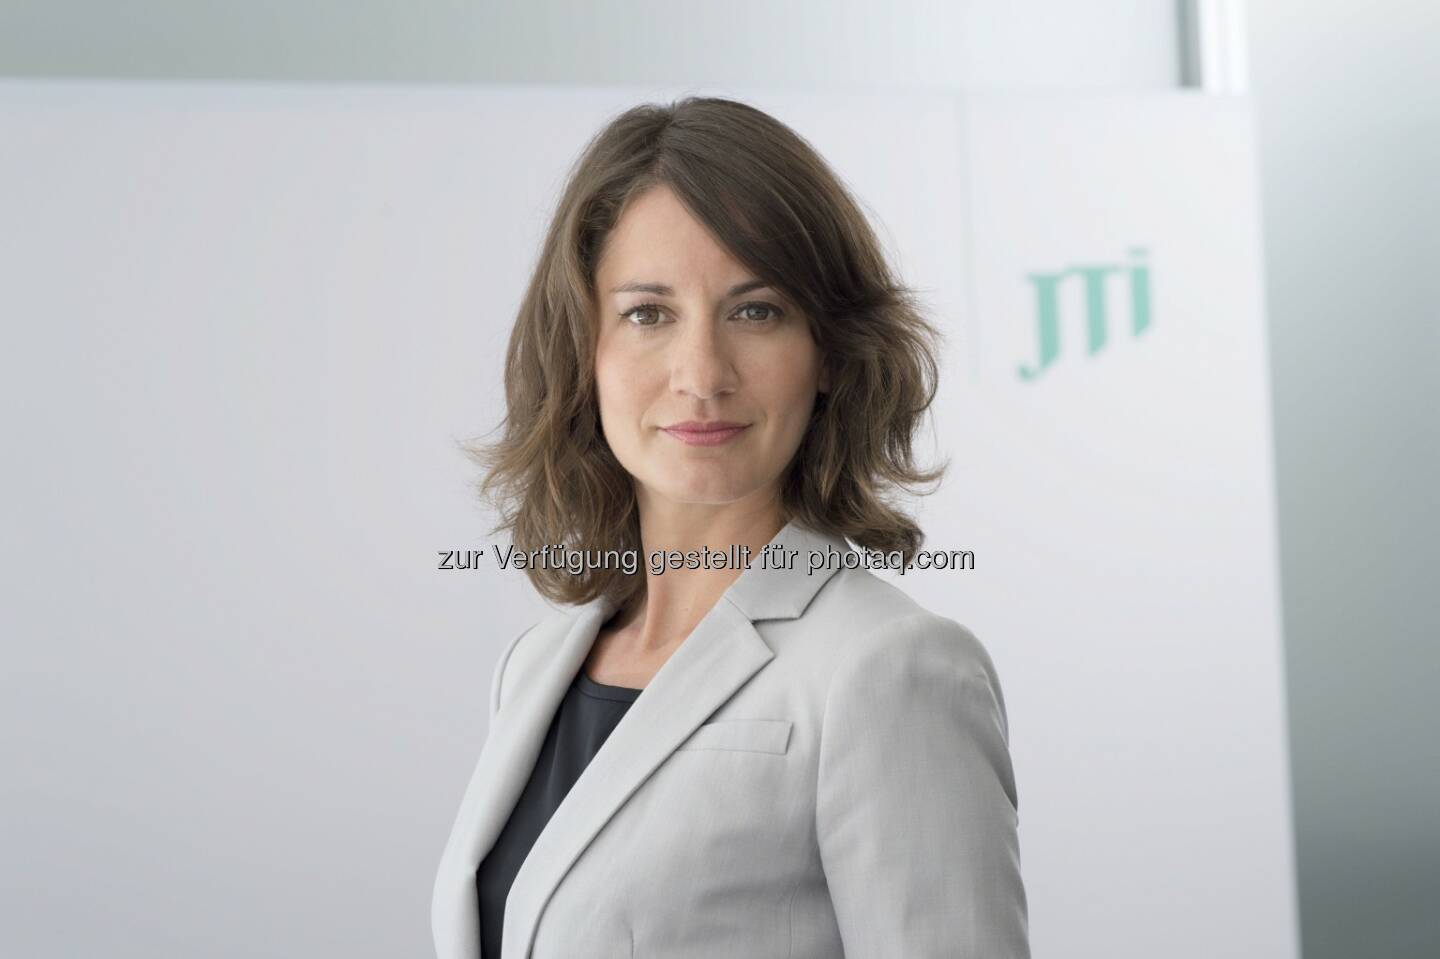 Japan Tobacco International (JTI) / Austria Tabak: Silvia Polan ist neuer Corporate Affairs & Communication Manager bei JTI Austria (Fotocredit: JTI Austria/Wilke)